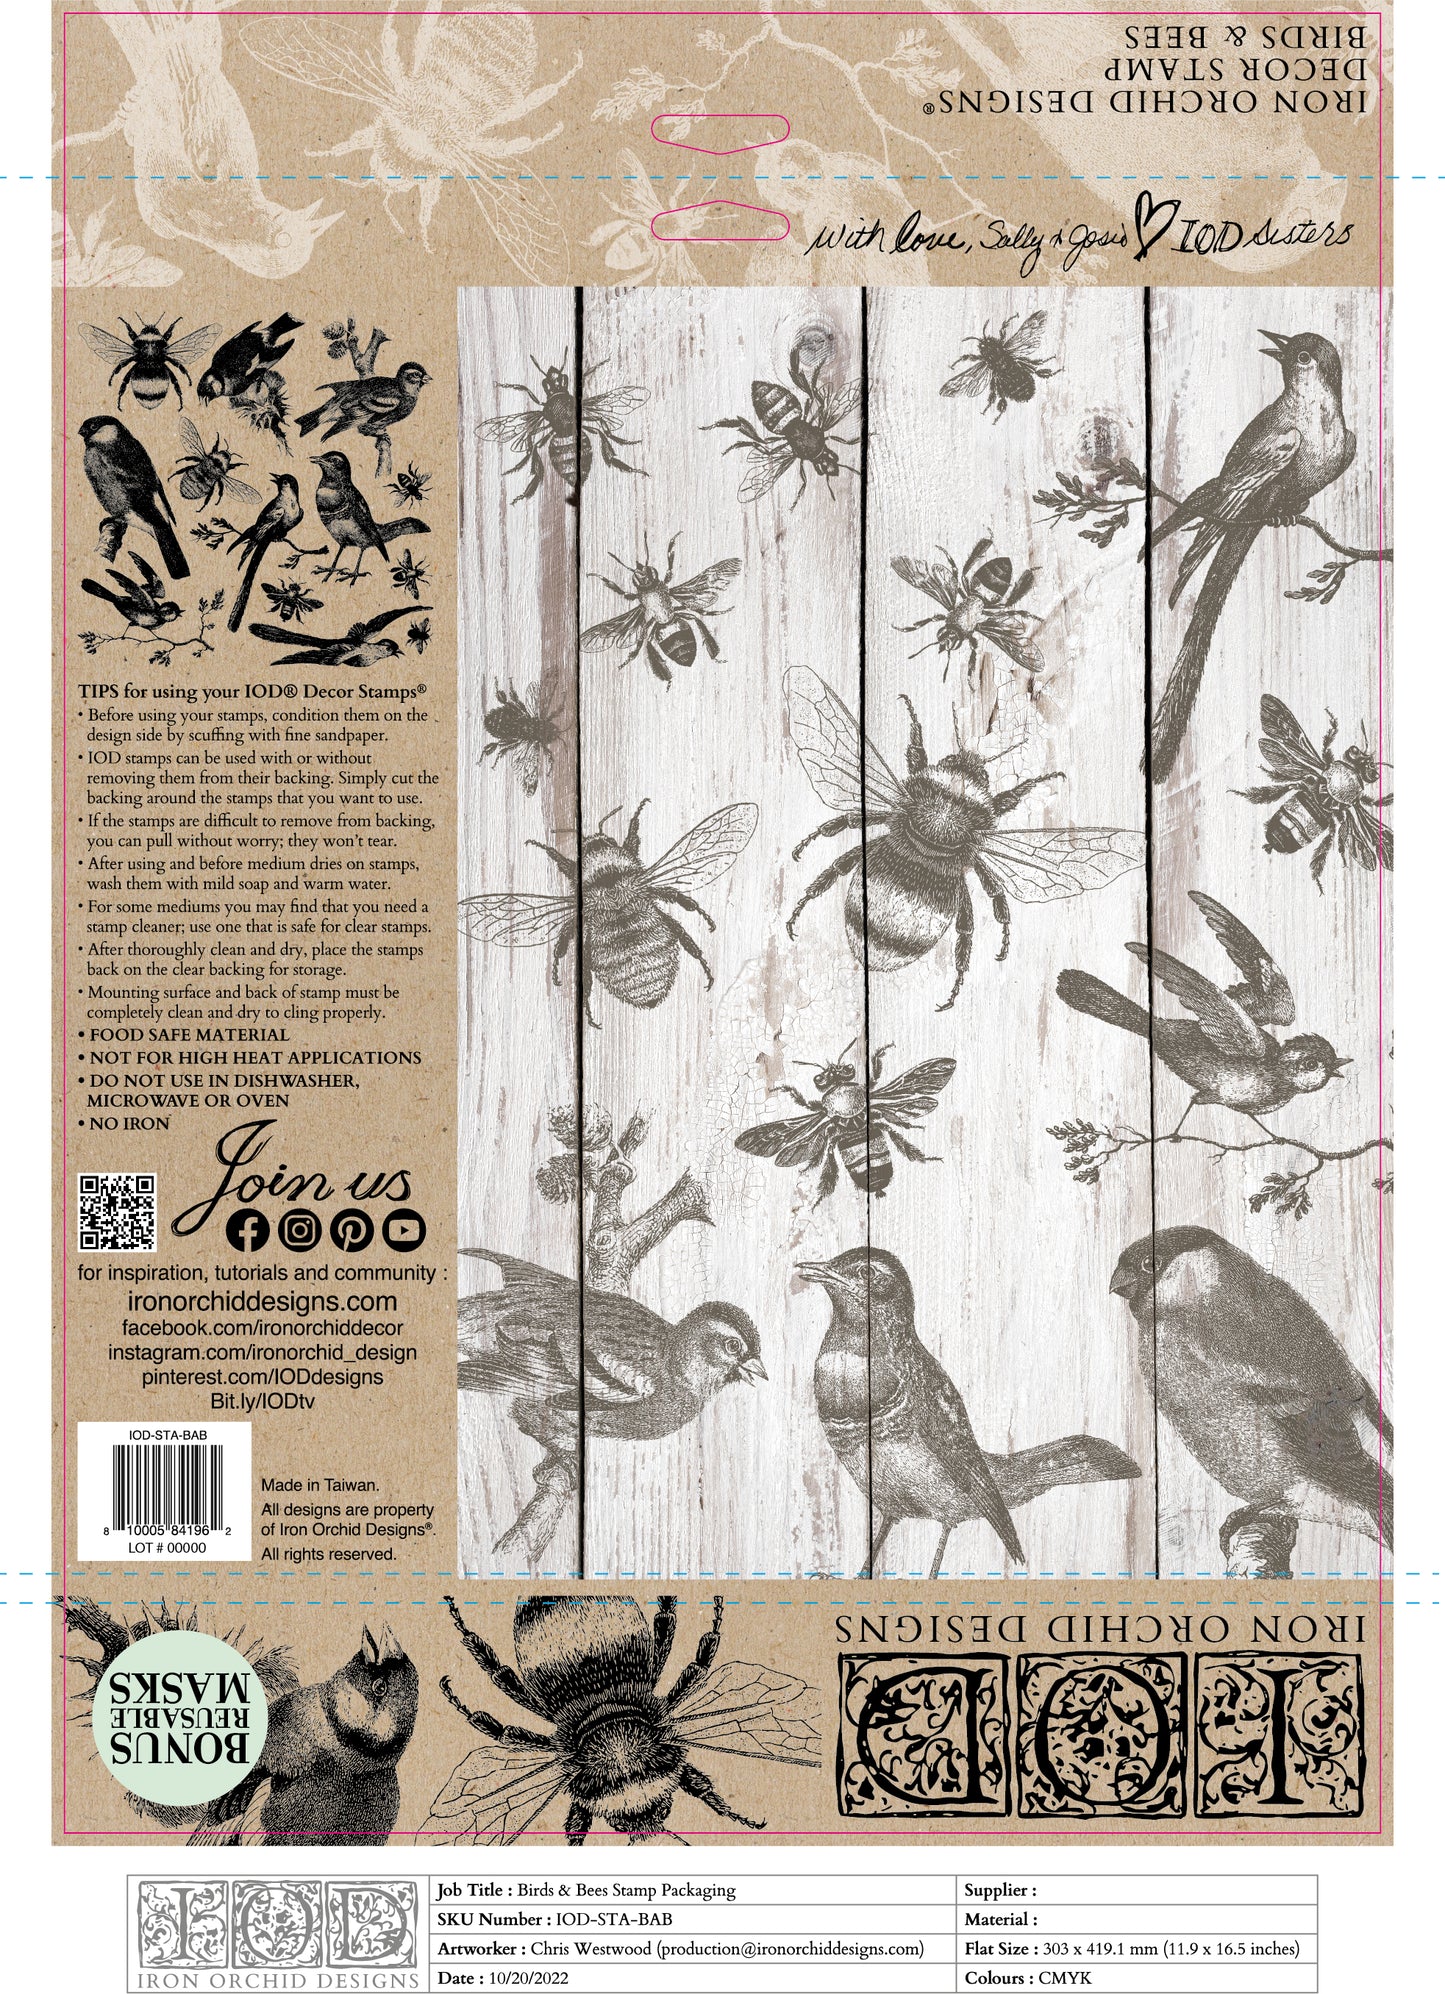 Birds & Bees - IOD Decor Stamp